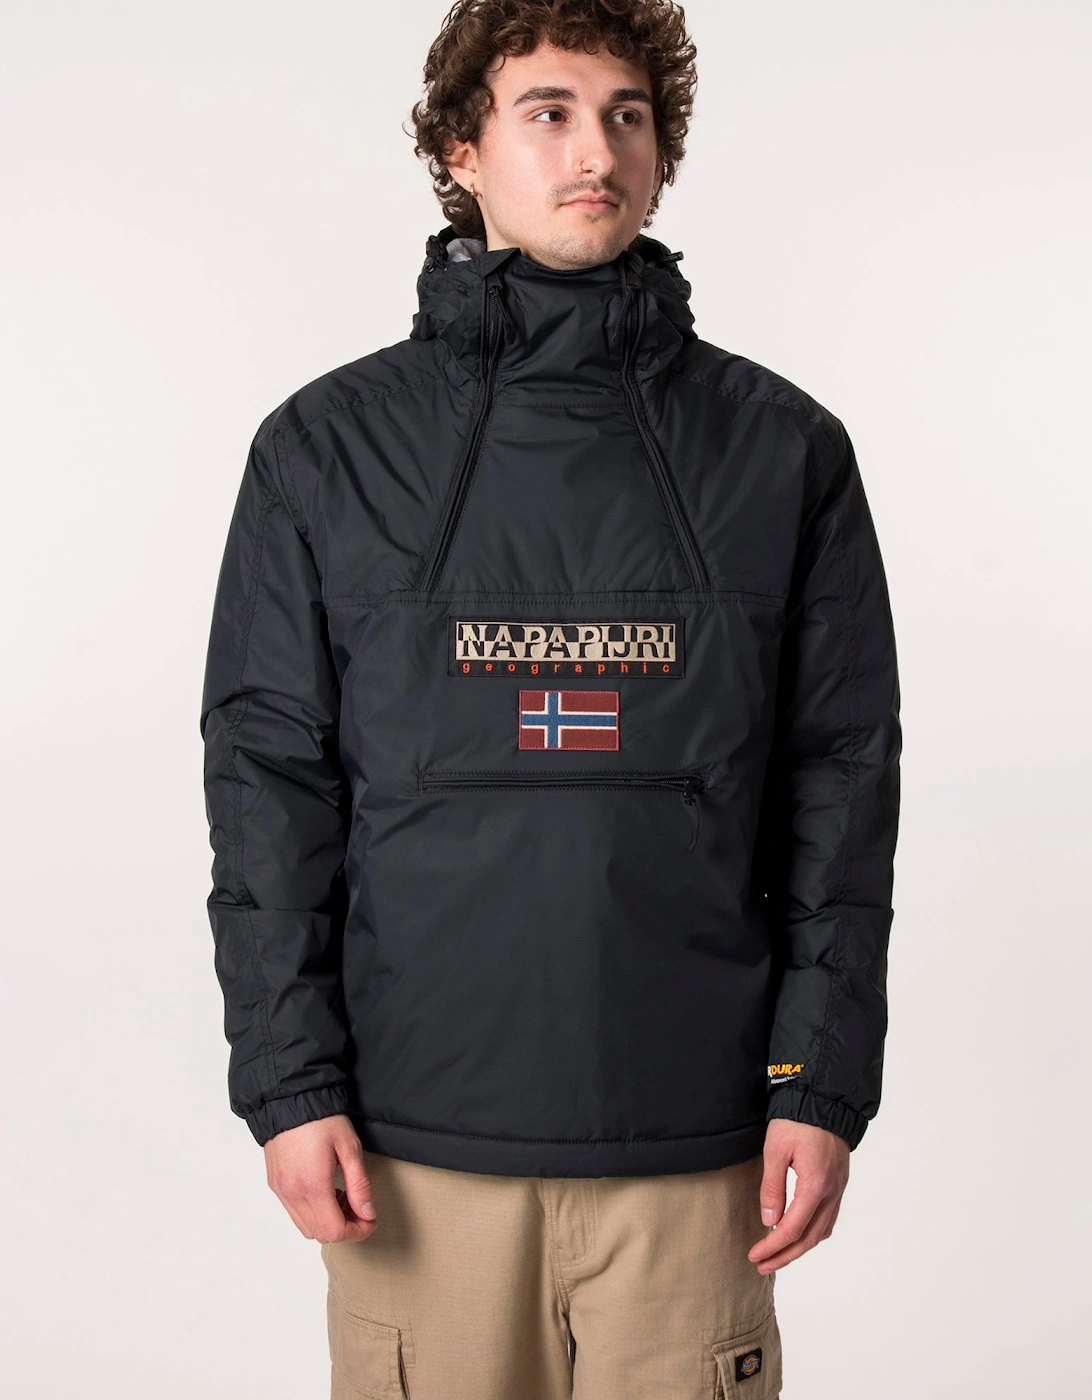 Northfarer 2.0 Winter Anorak Jacket